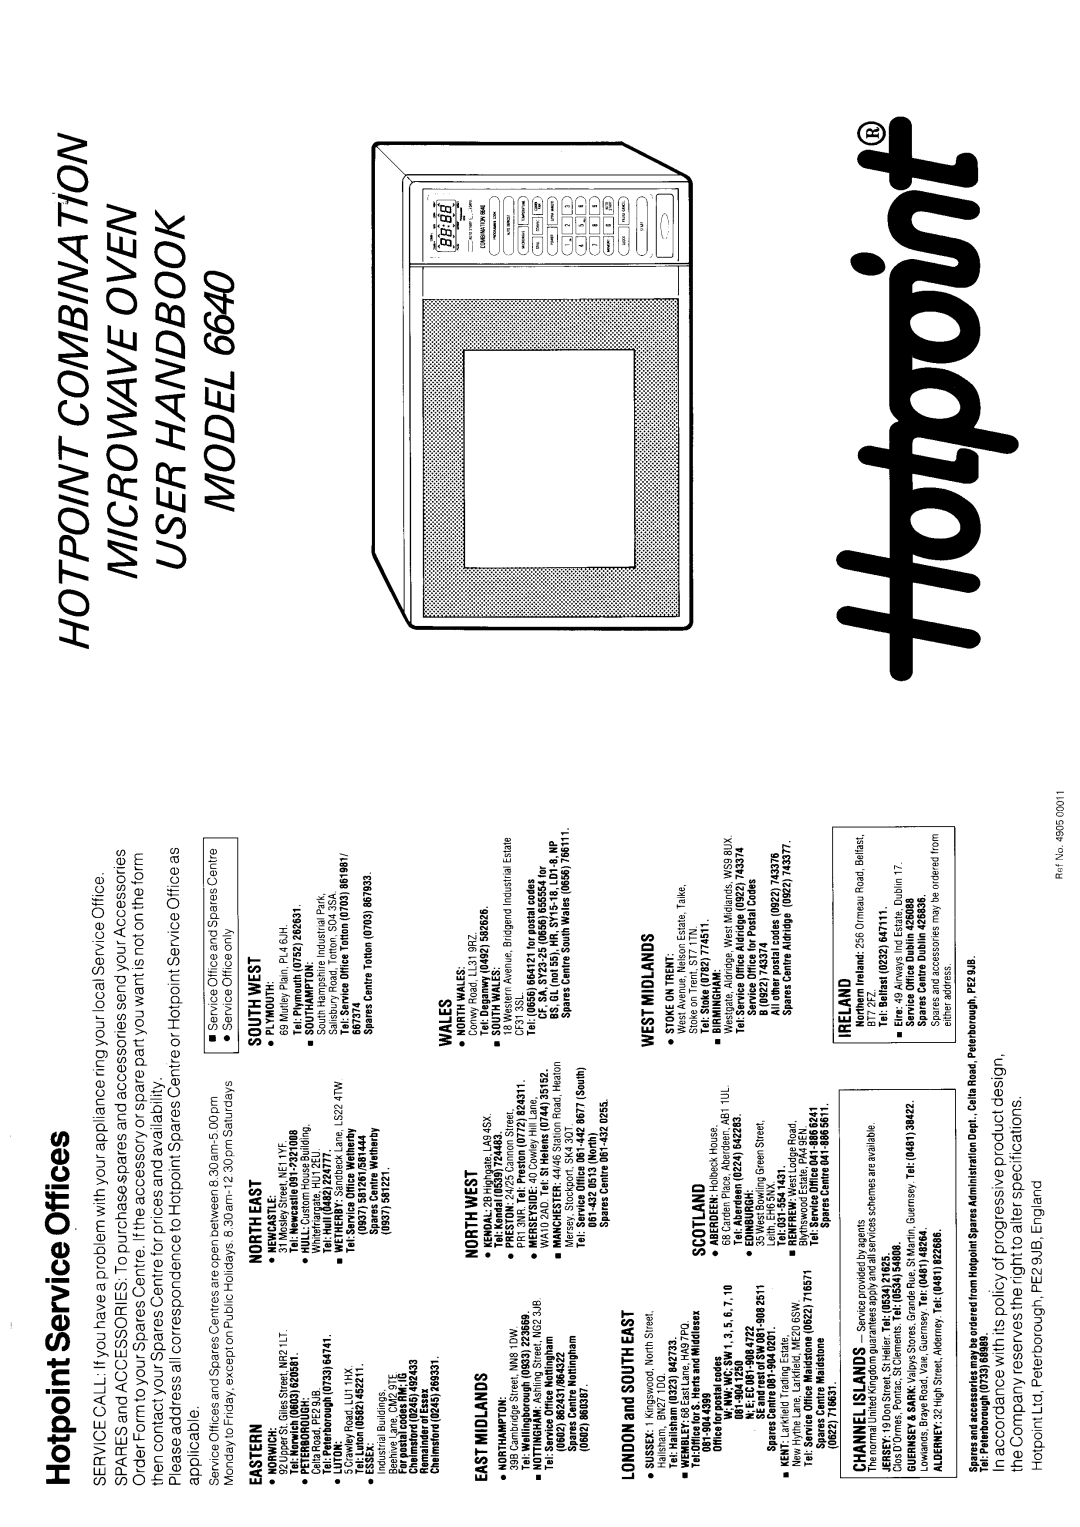 Hotpoint 6640 manual 